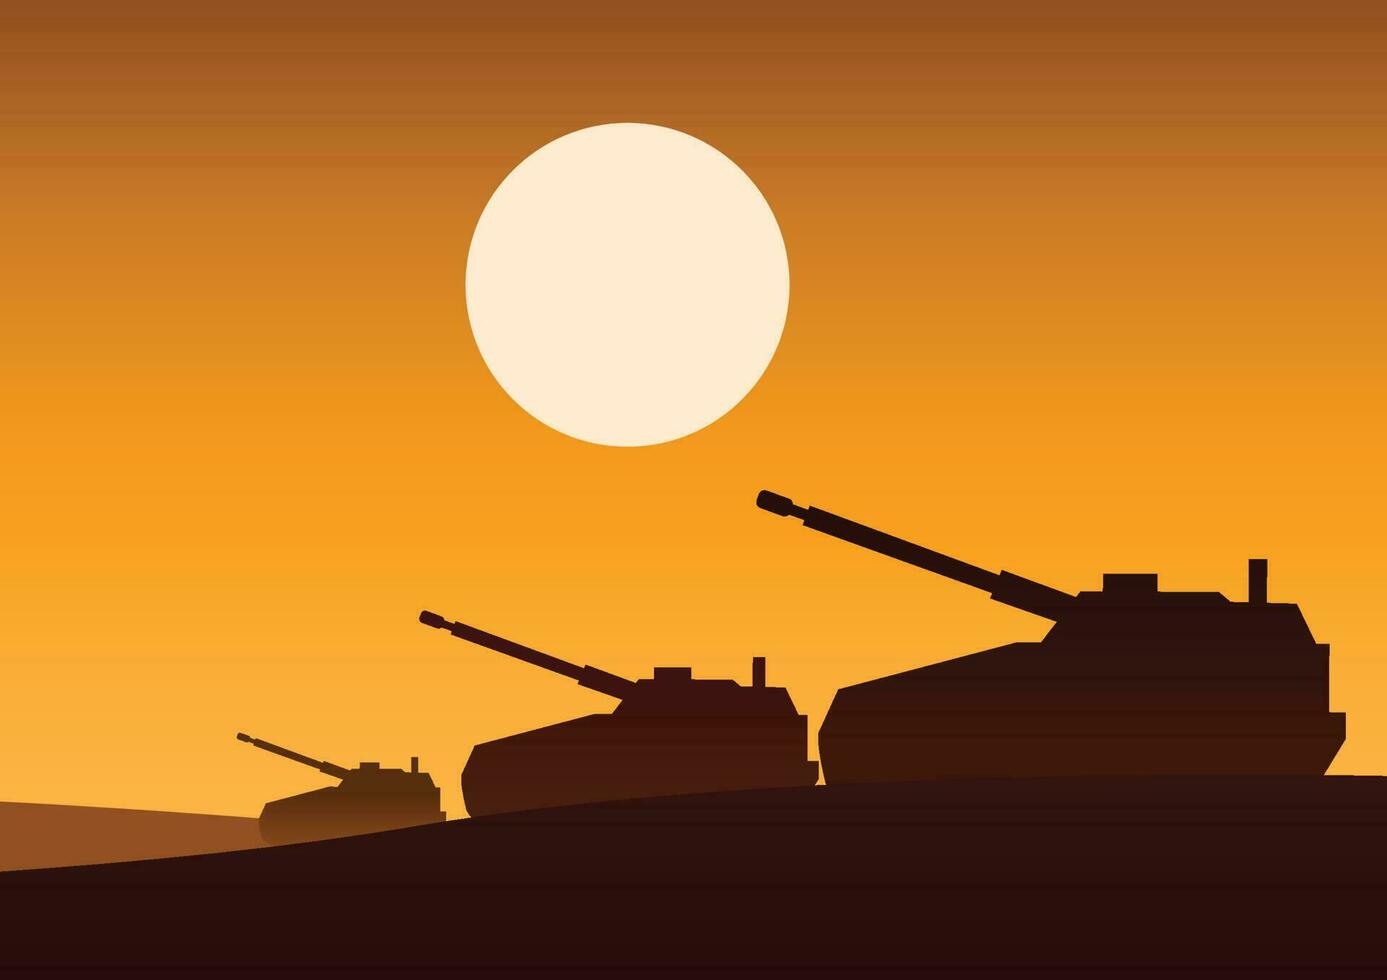 tank still on desert to attack enemy,silhouette design,vector illustration vector